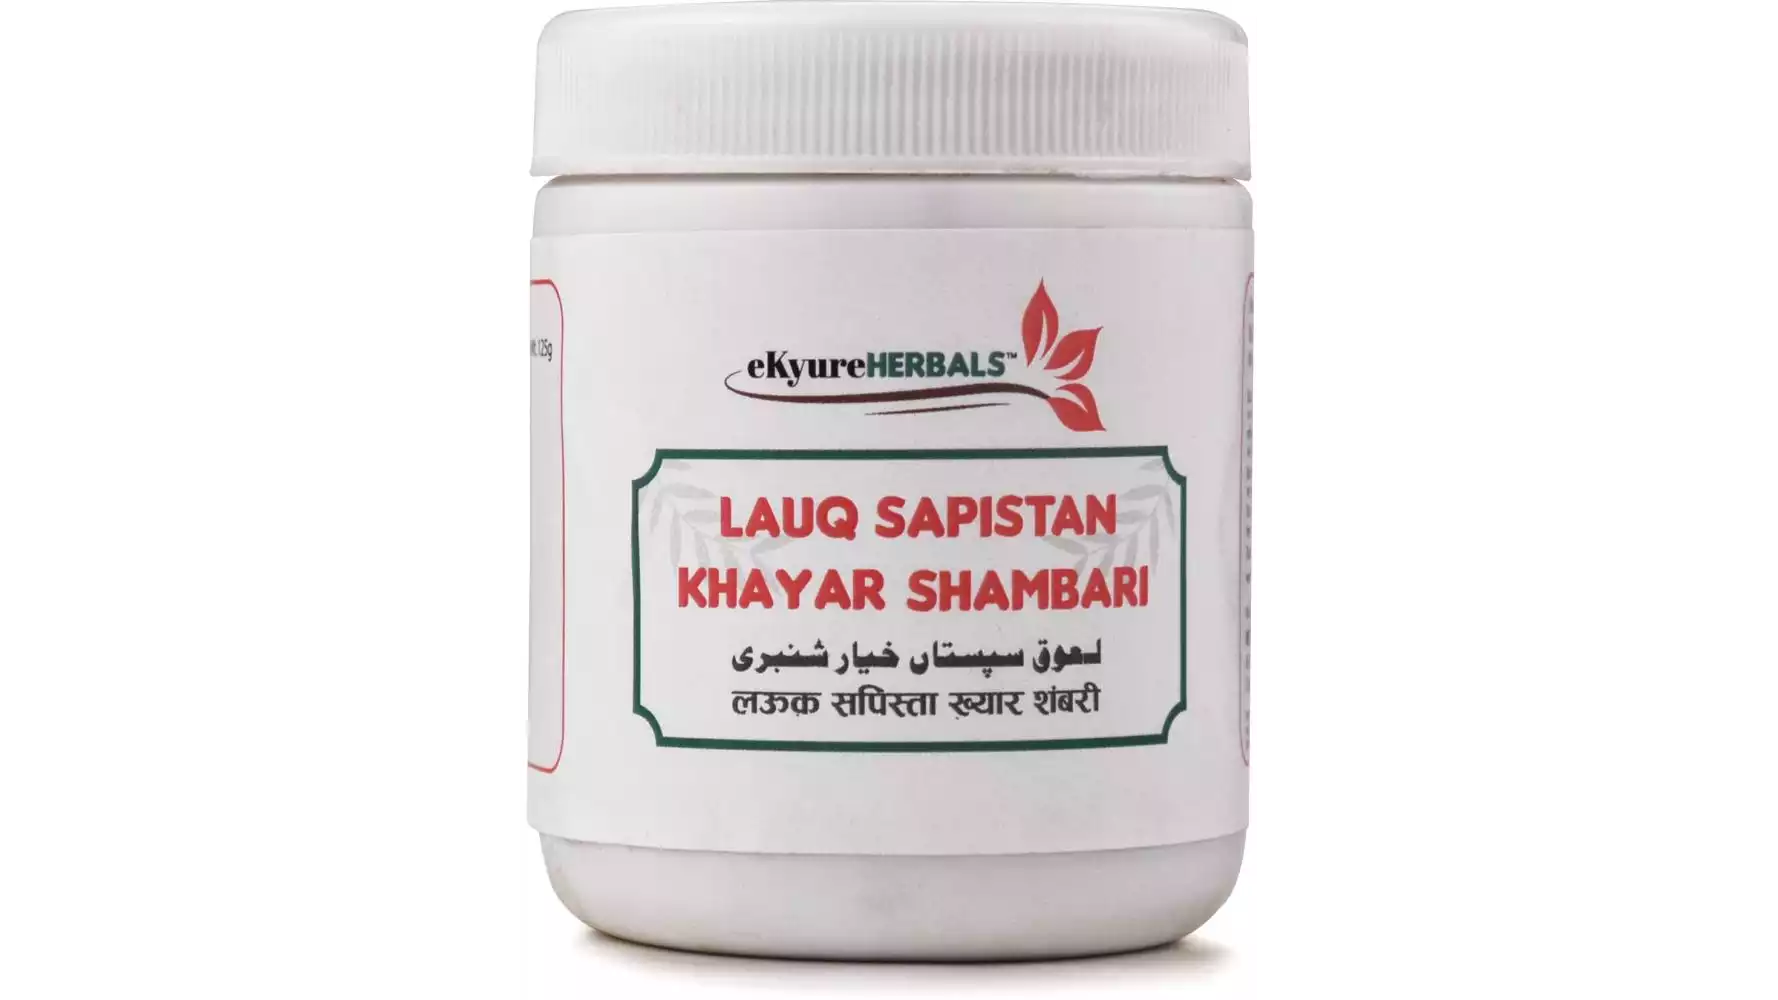 Ekyure Herbals Lauq Sapistan Khyar Shambari (125g)